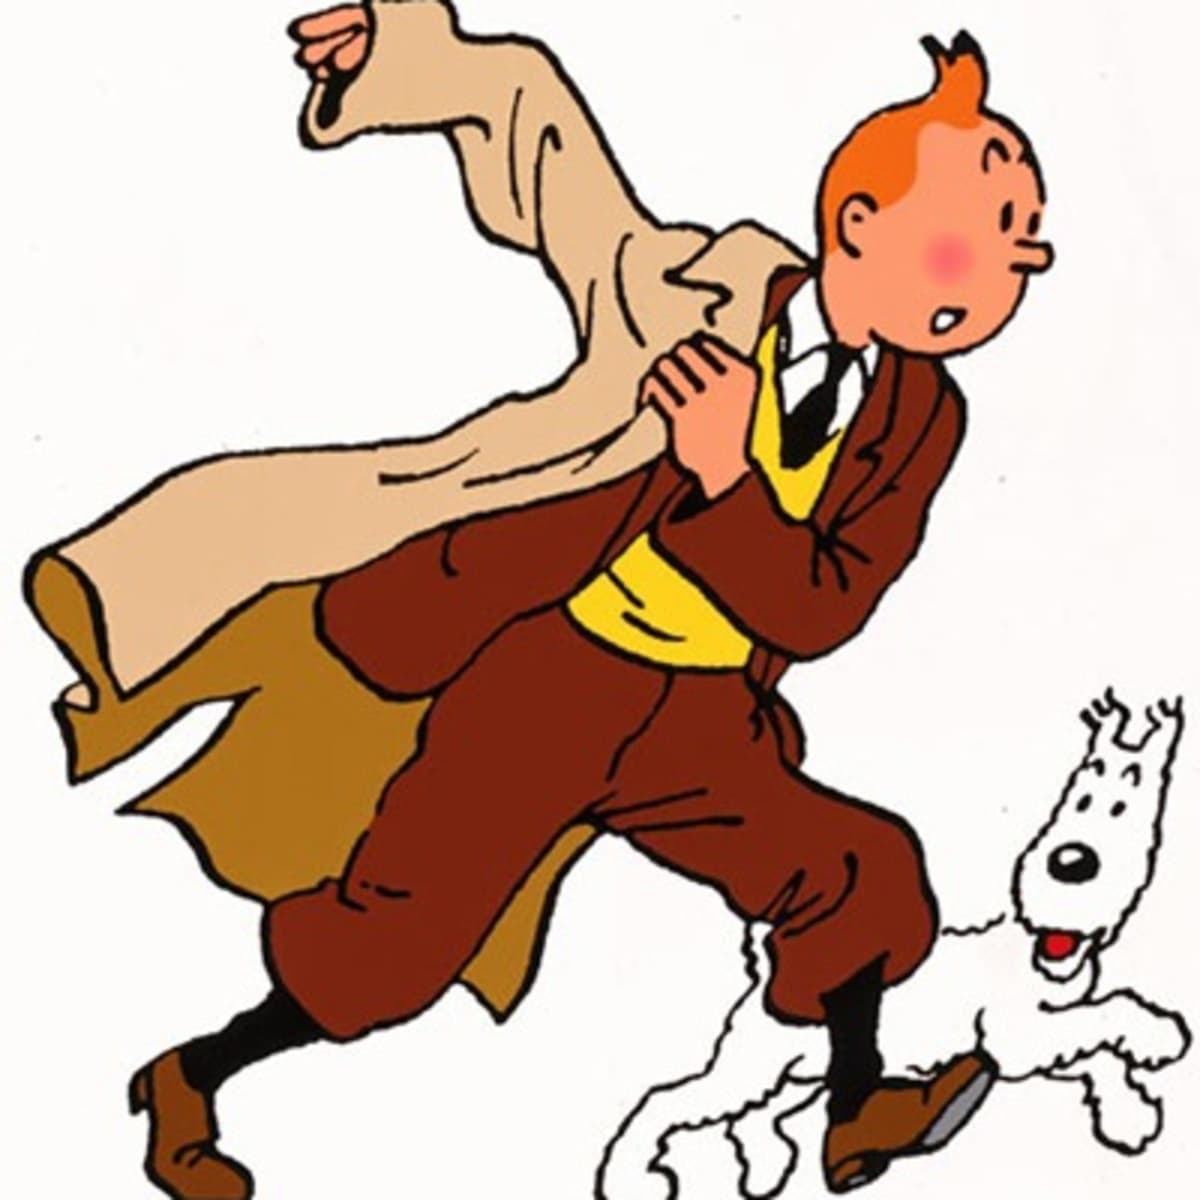 Amazing Adventures of Tintin- The Genius of Hergé - HubPages